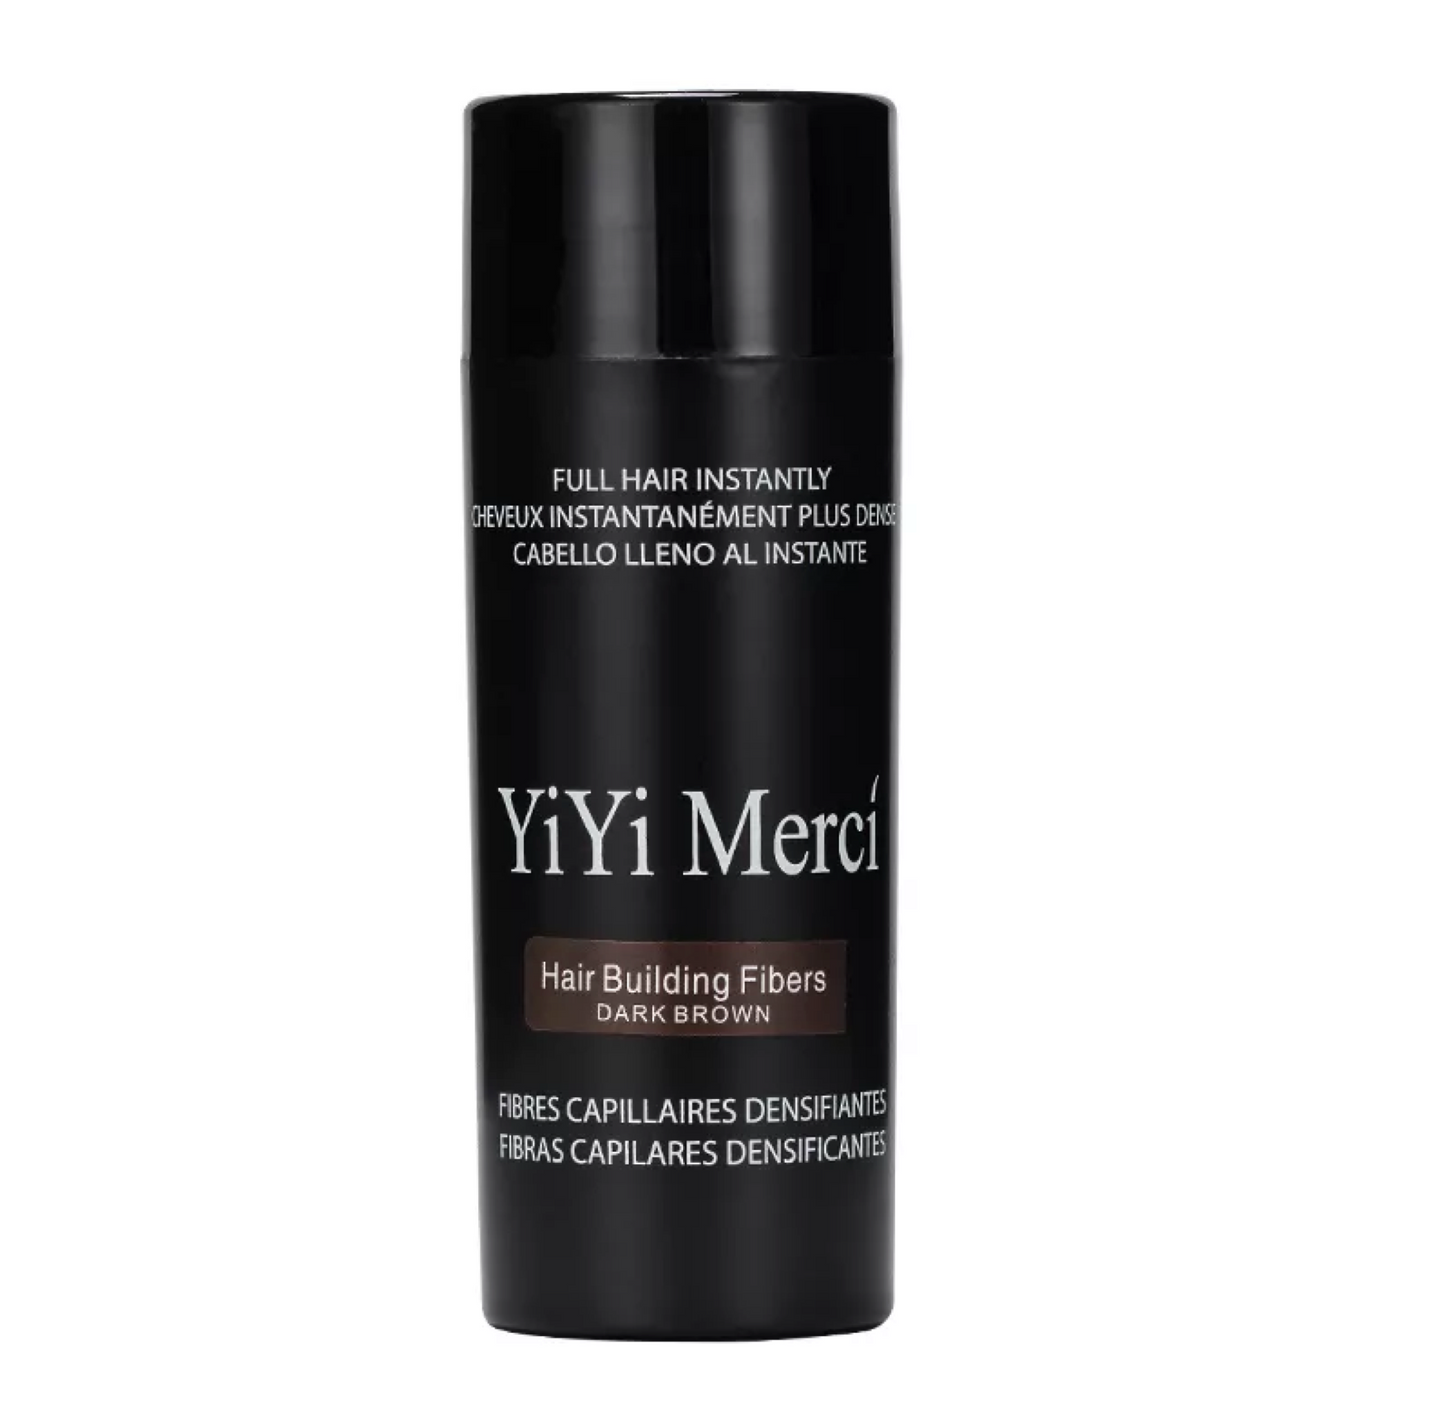 Yiyi Merci Hair Building Fibers 27.5g